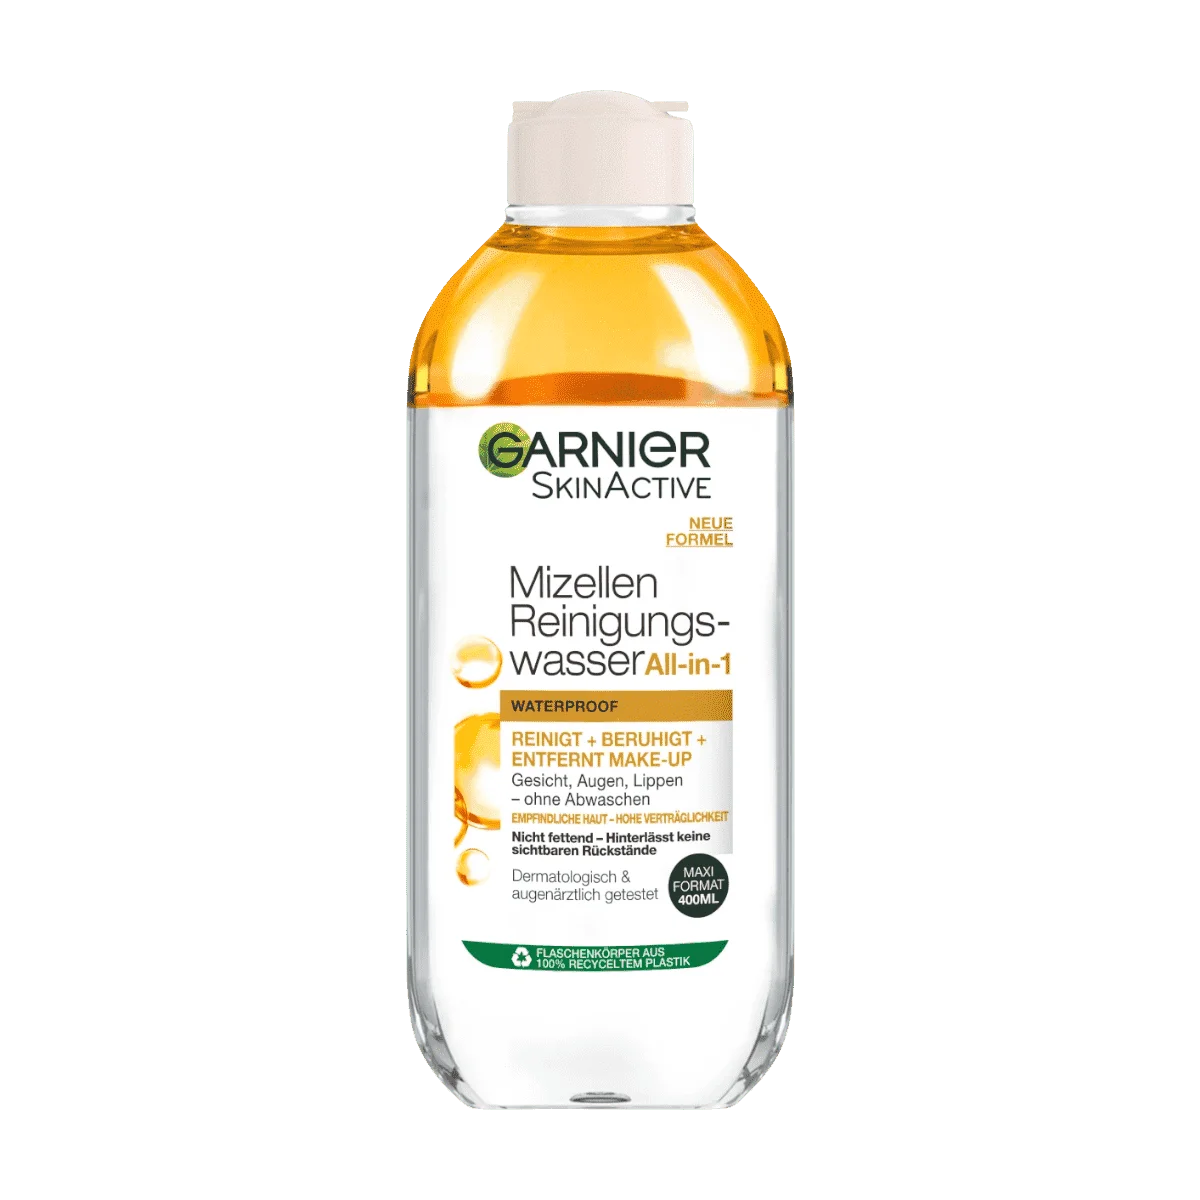 Garnier SkinActive Mizellen Reinigungswasser All-in-1 Waterproof, 400 ml 